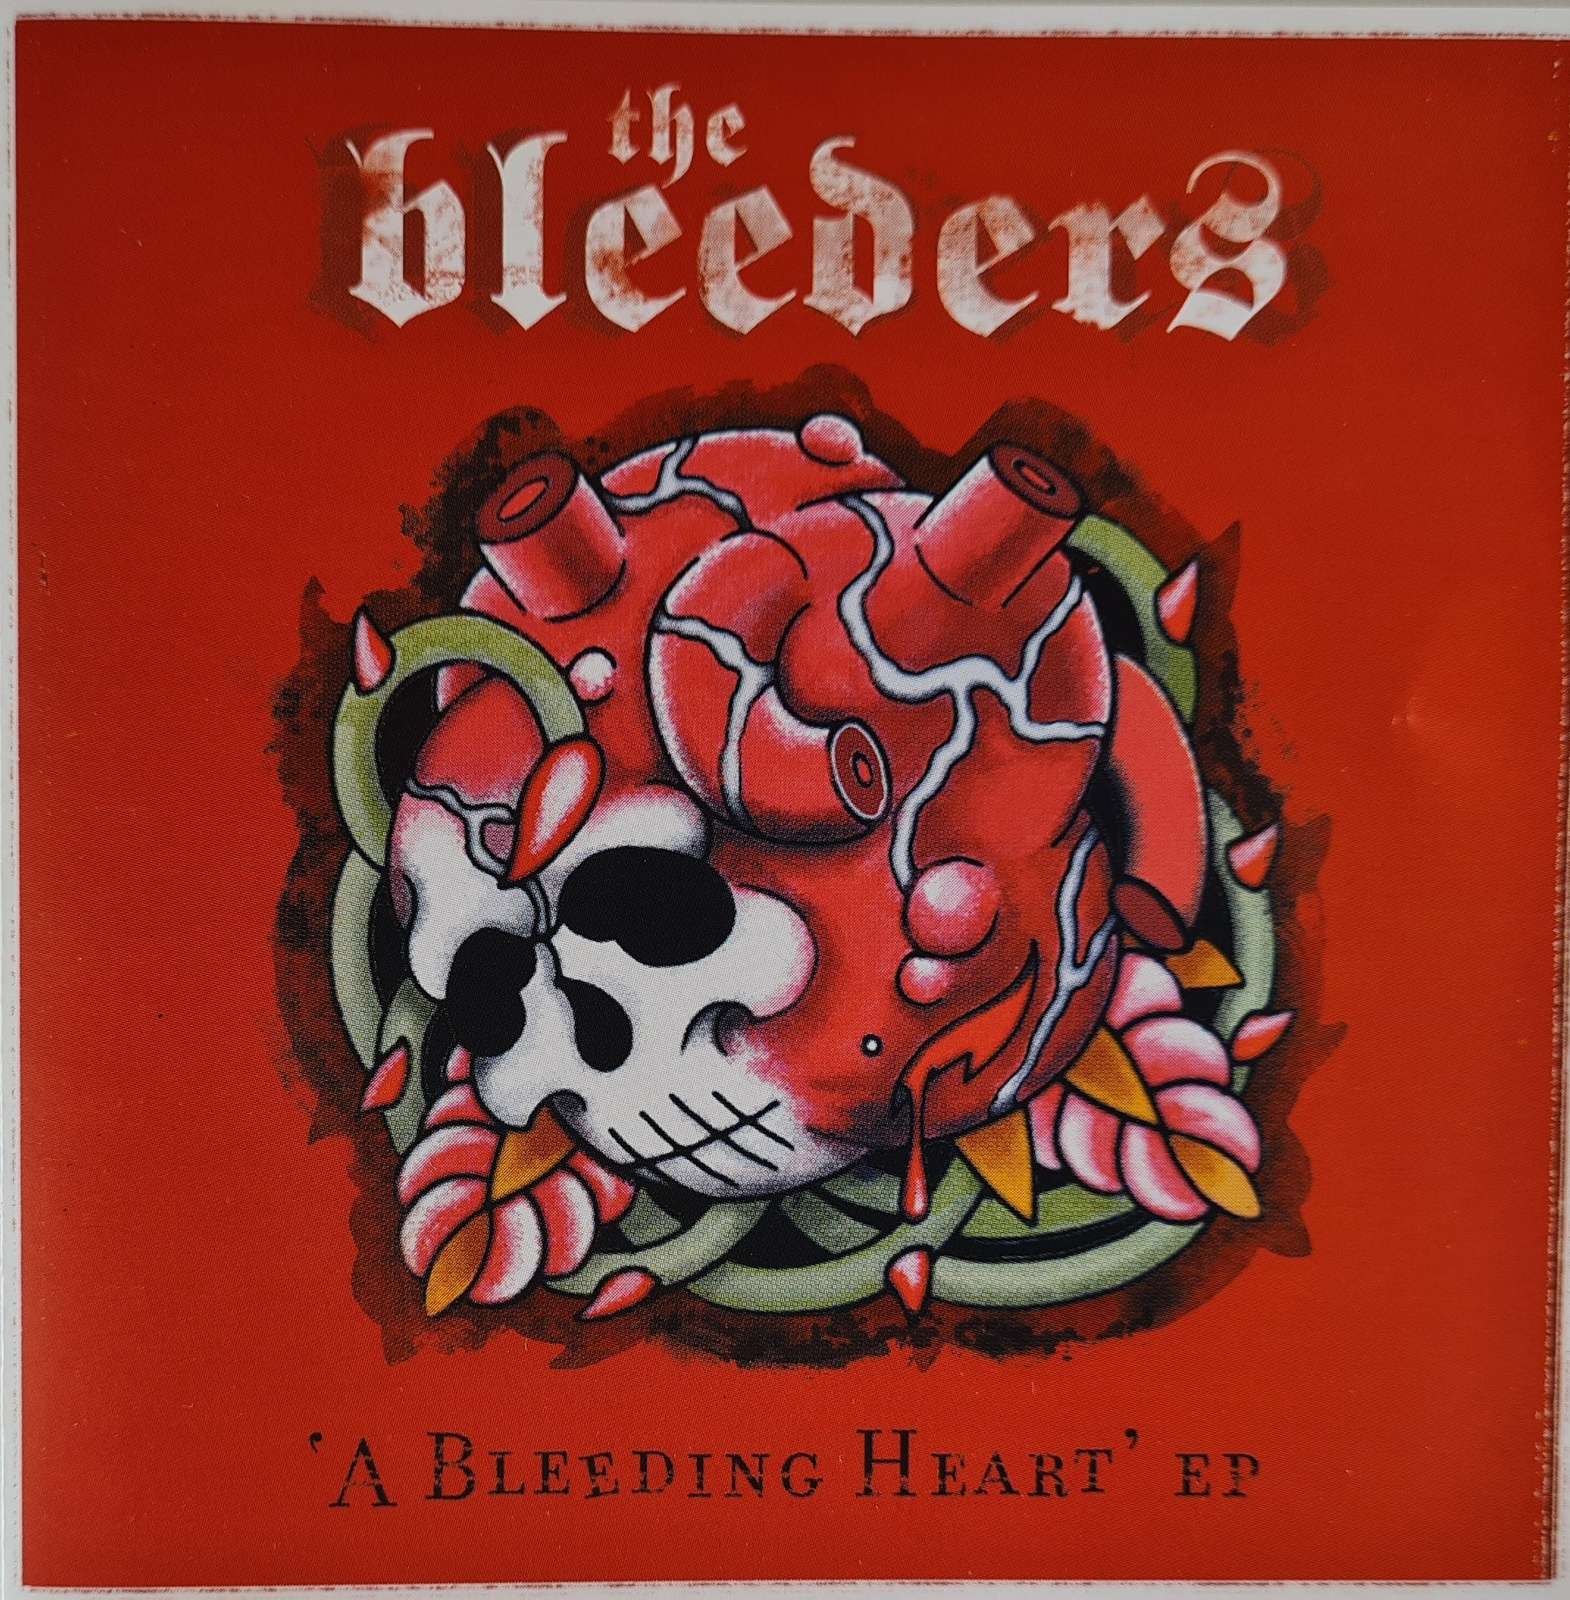 The Bleeders - A Bleeding Heart E.P. (CD)